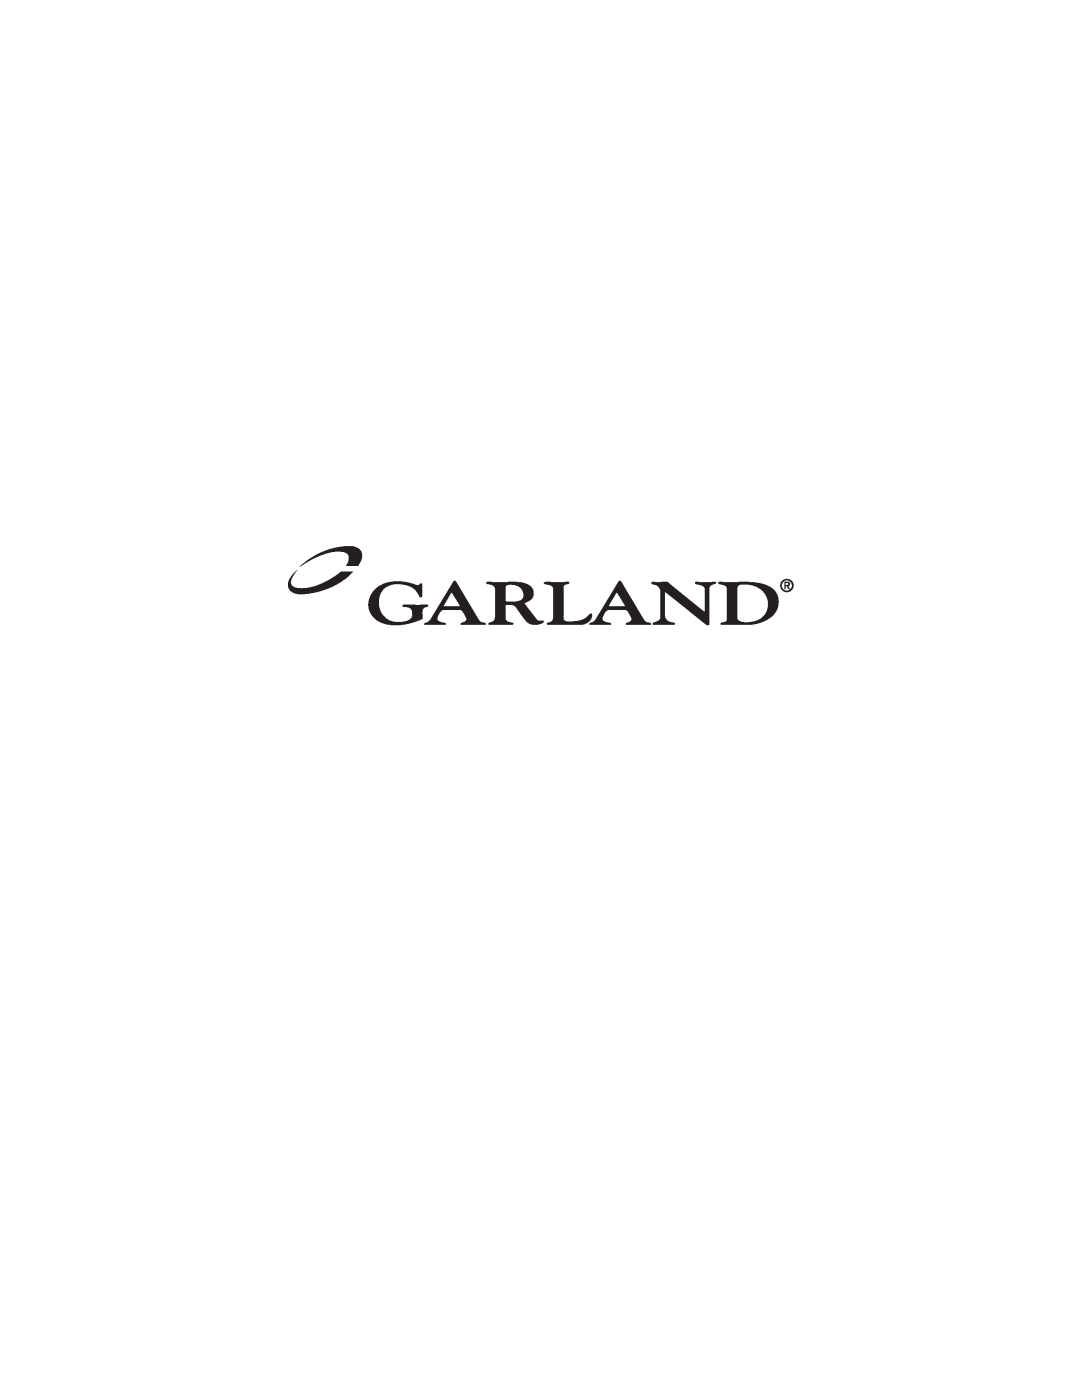 Garland S18-F installation instructions 